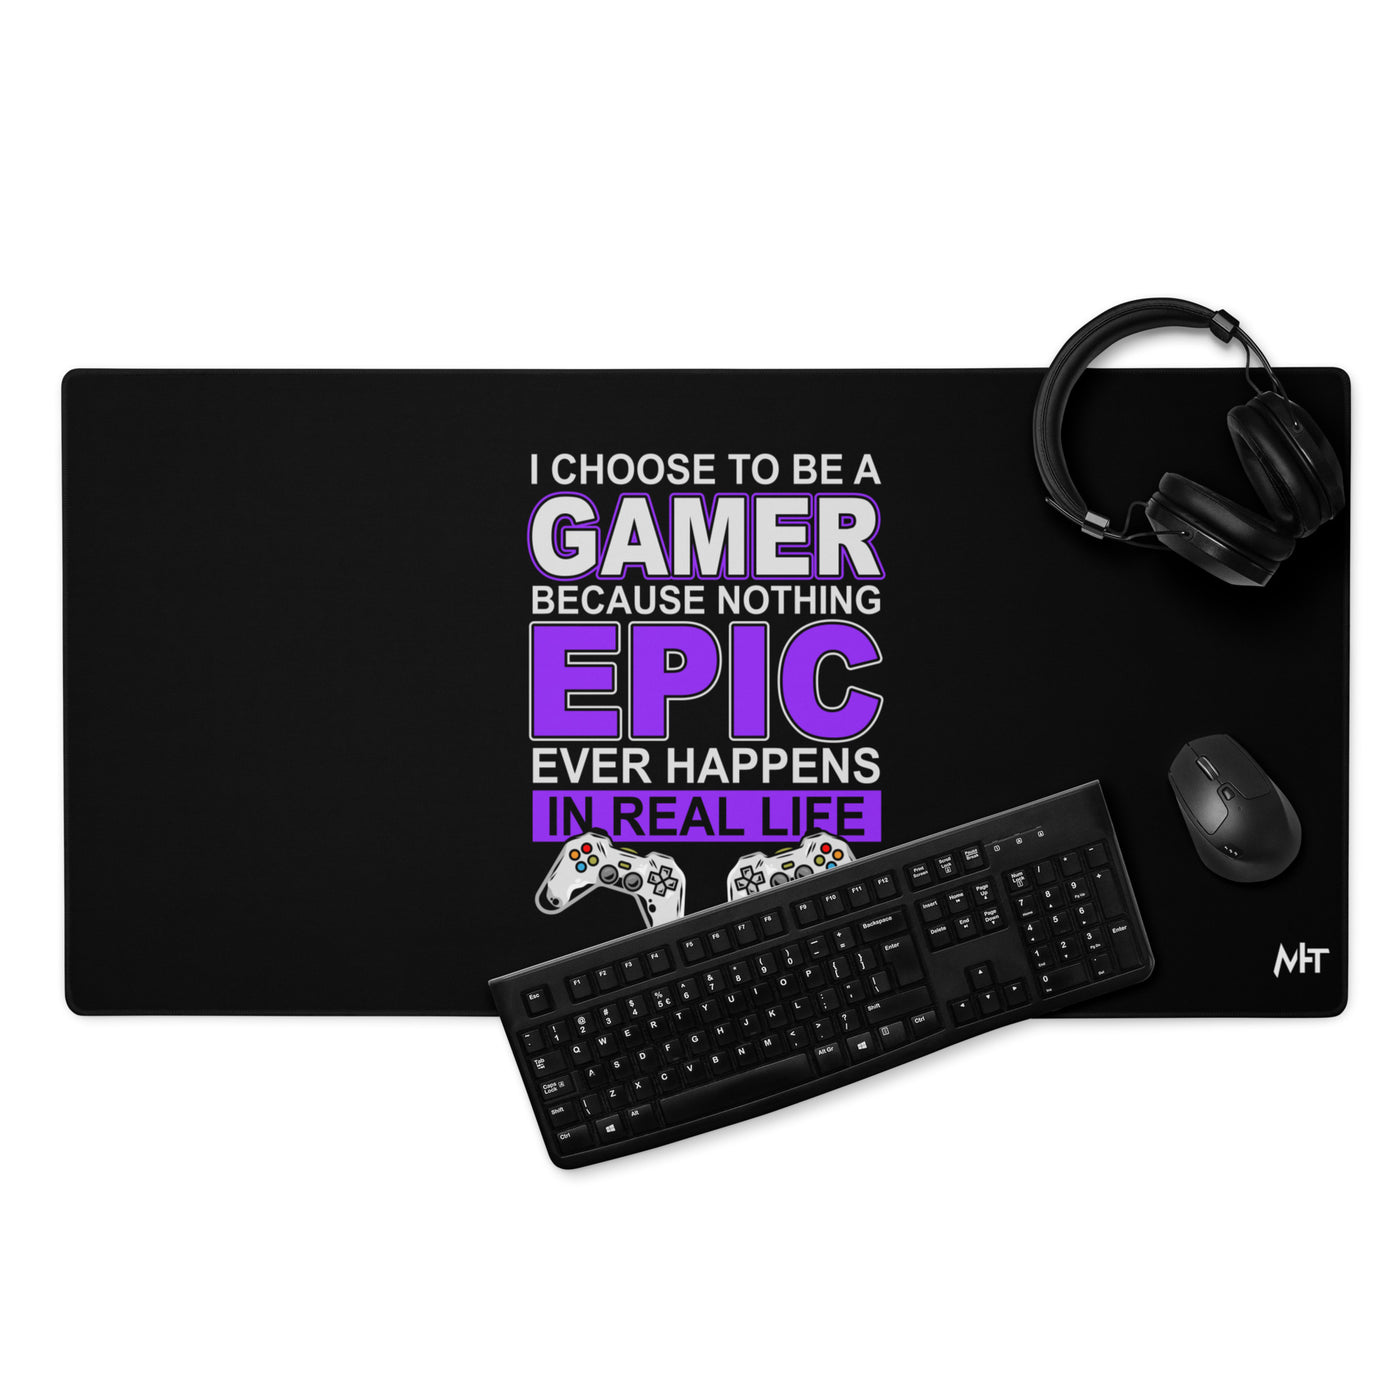 Gamer Epic in Real Life - Desk Mat